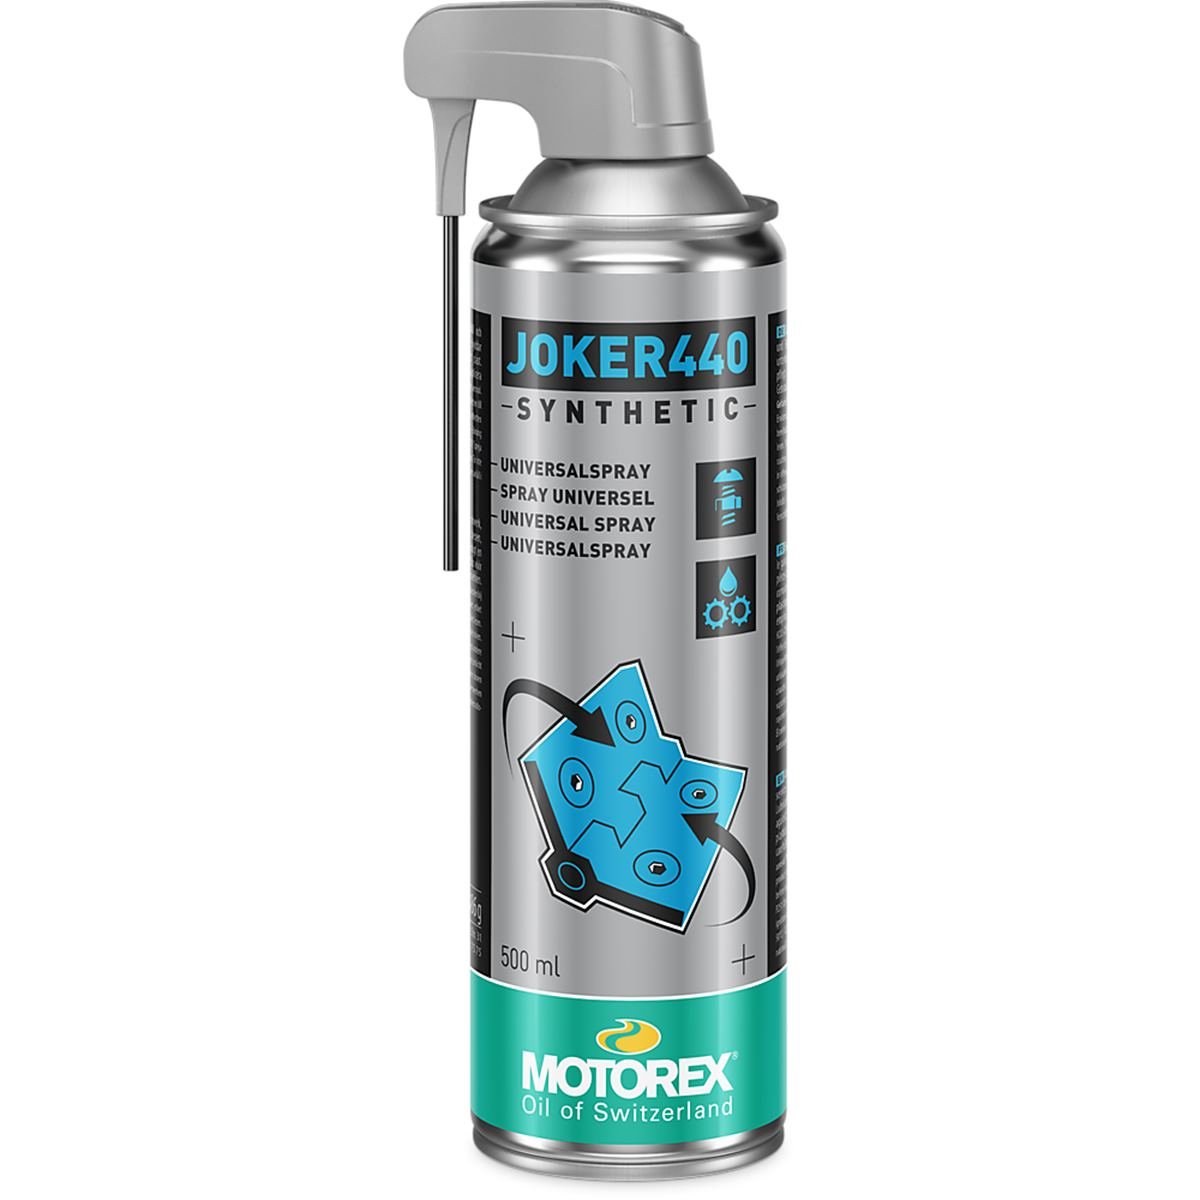 Motorex Spray Sintetico Joker 440 500 ml